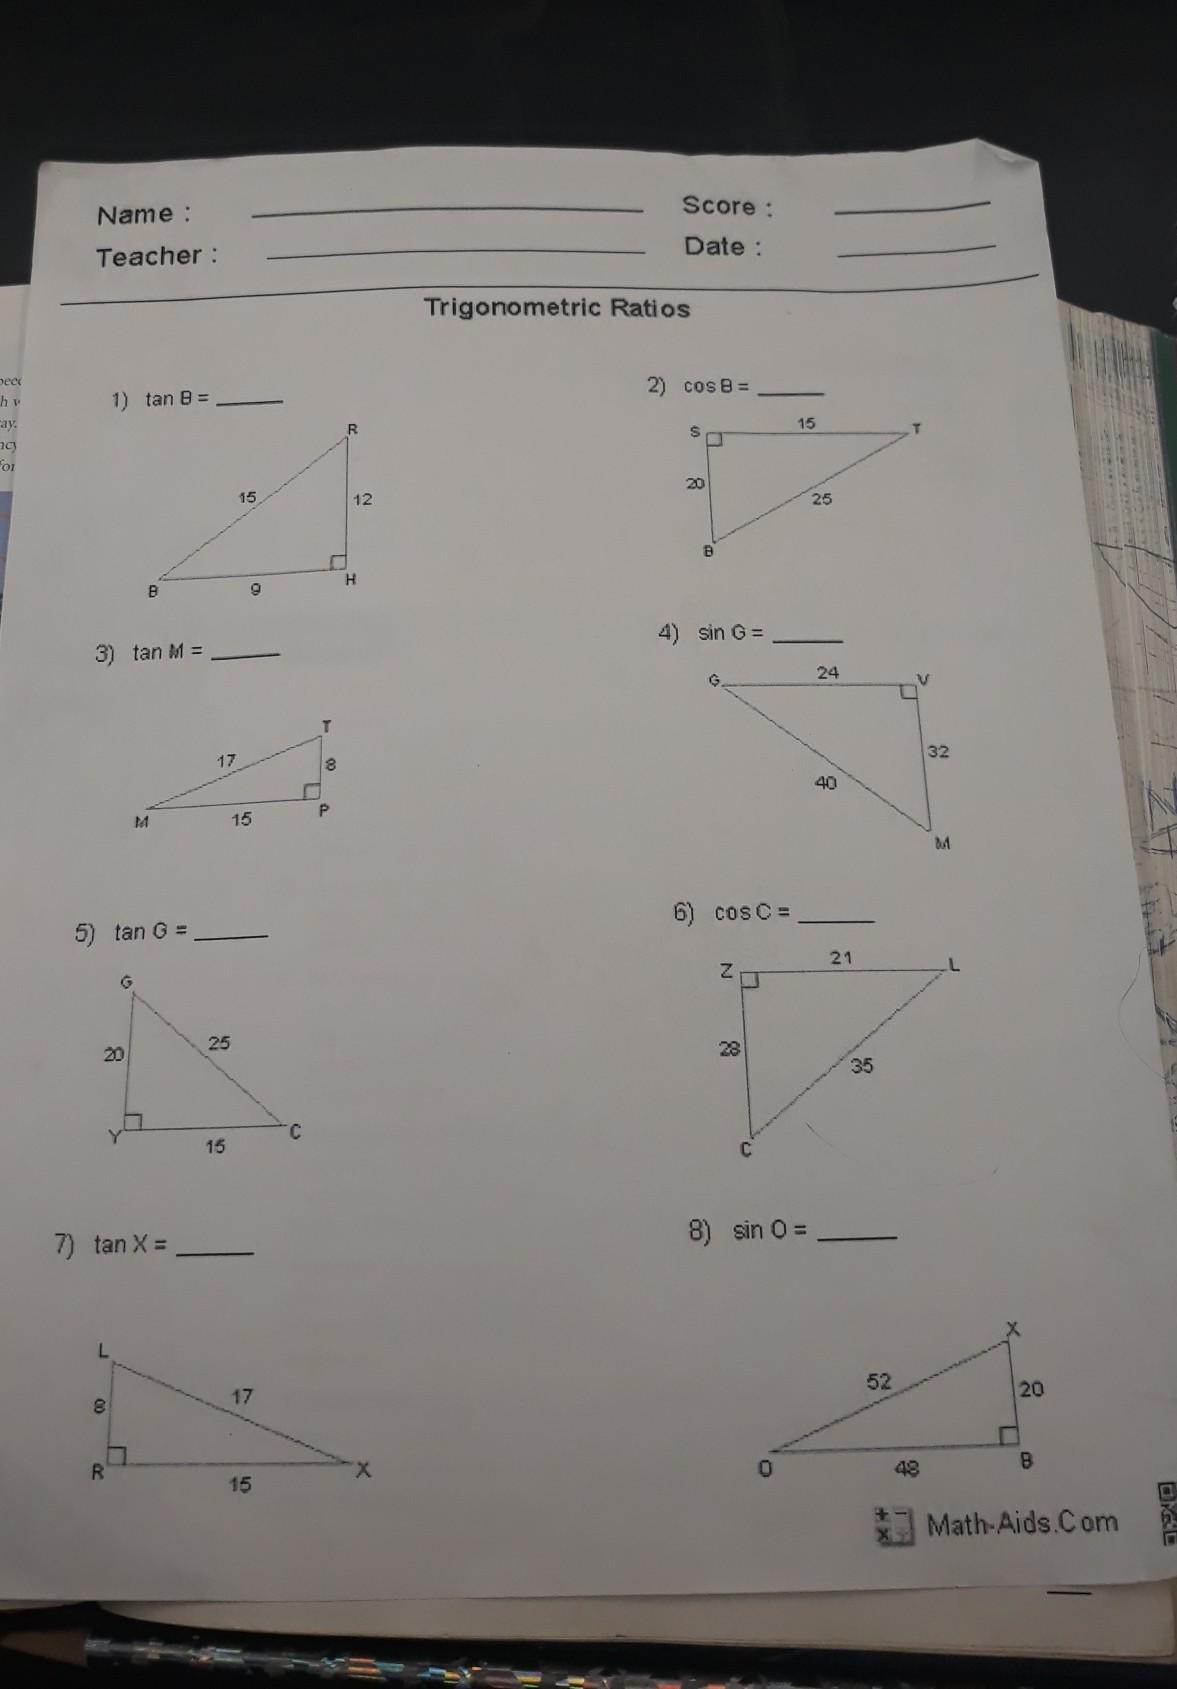 Trigonometric Ratios Worksheet Answers Trigonometric Ratios Worksheet From Math Aids Brainly